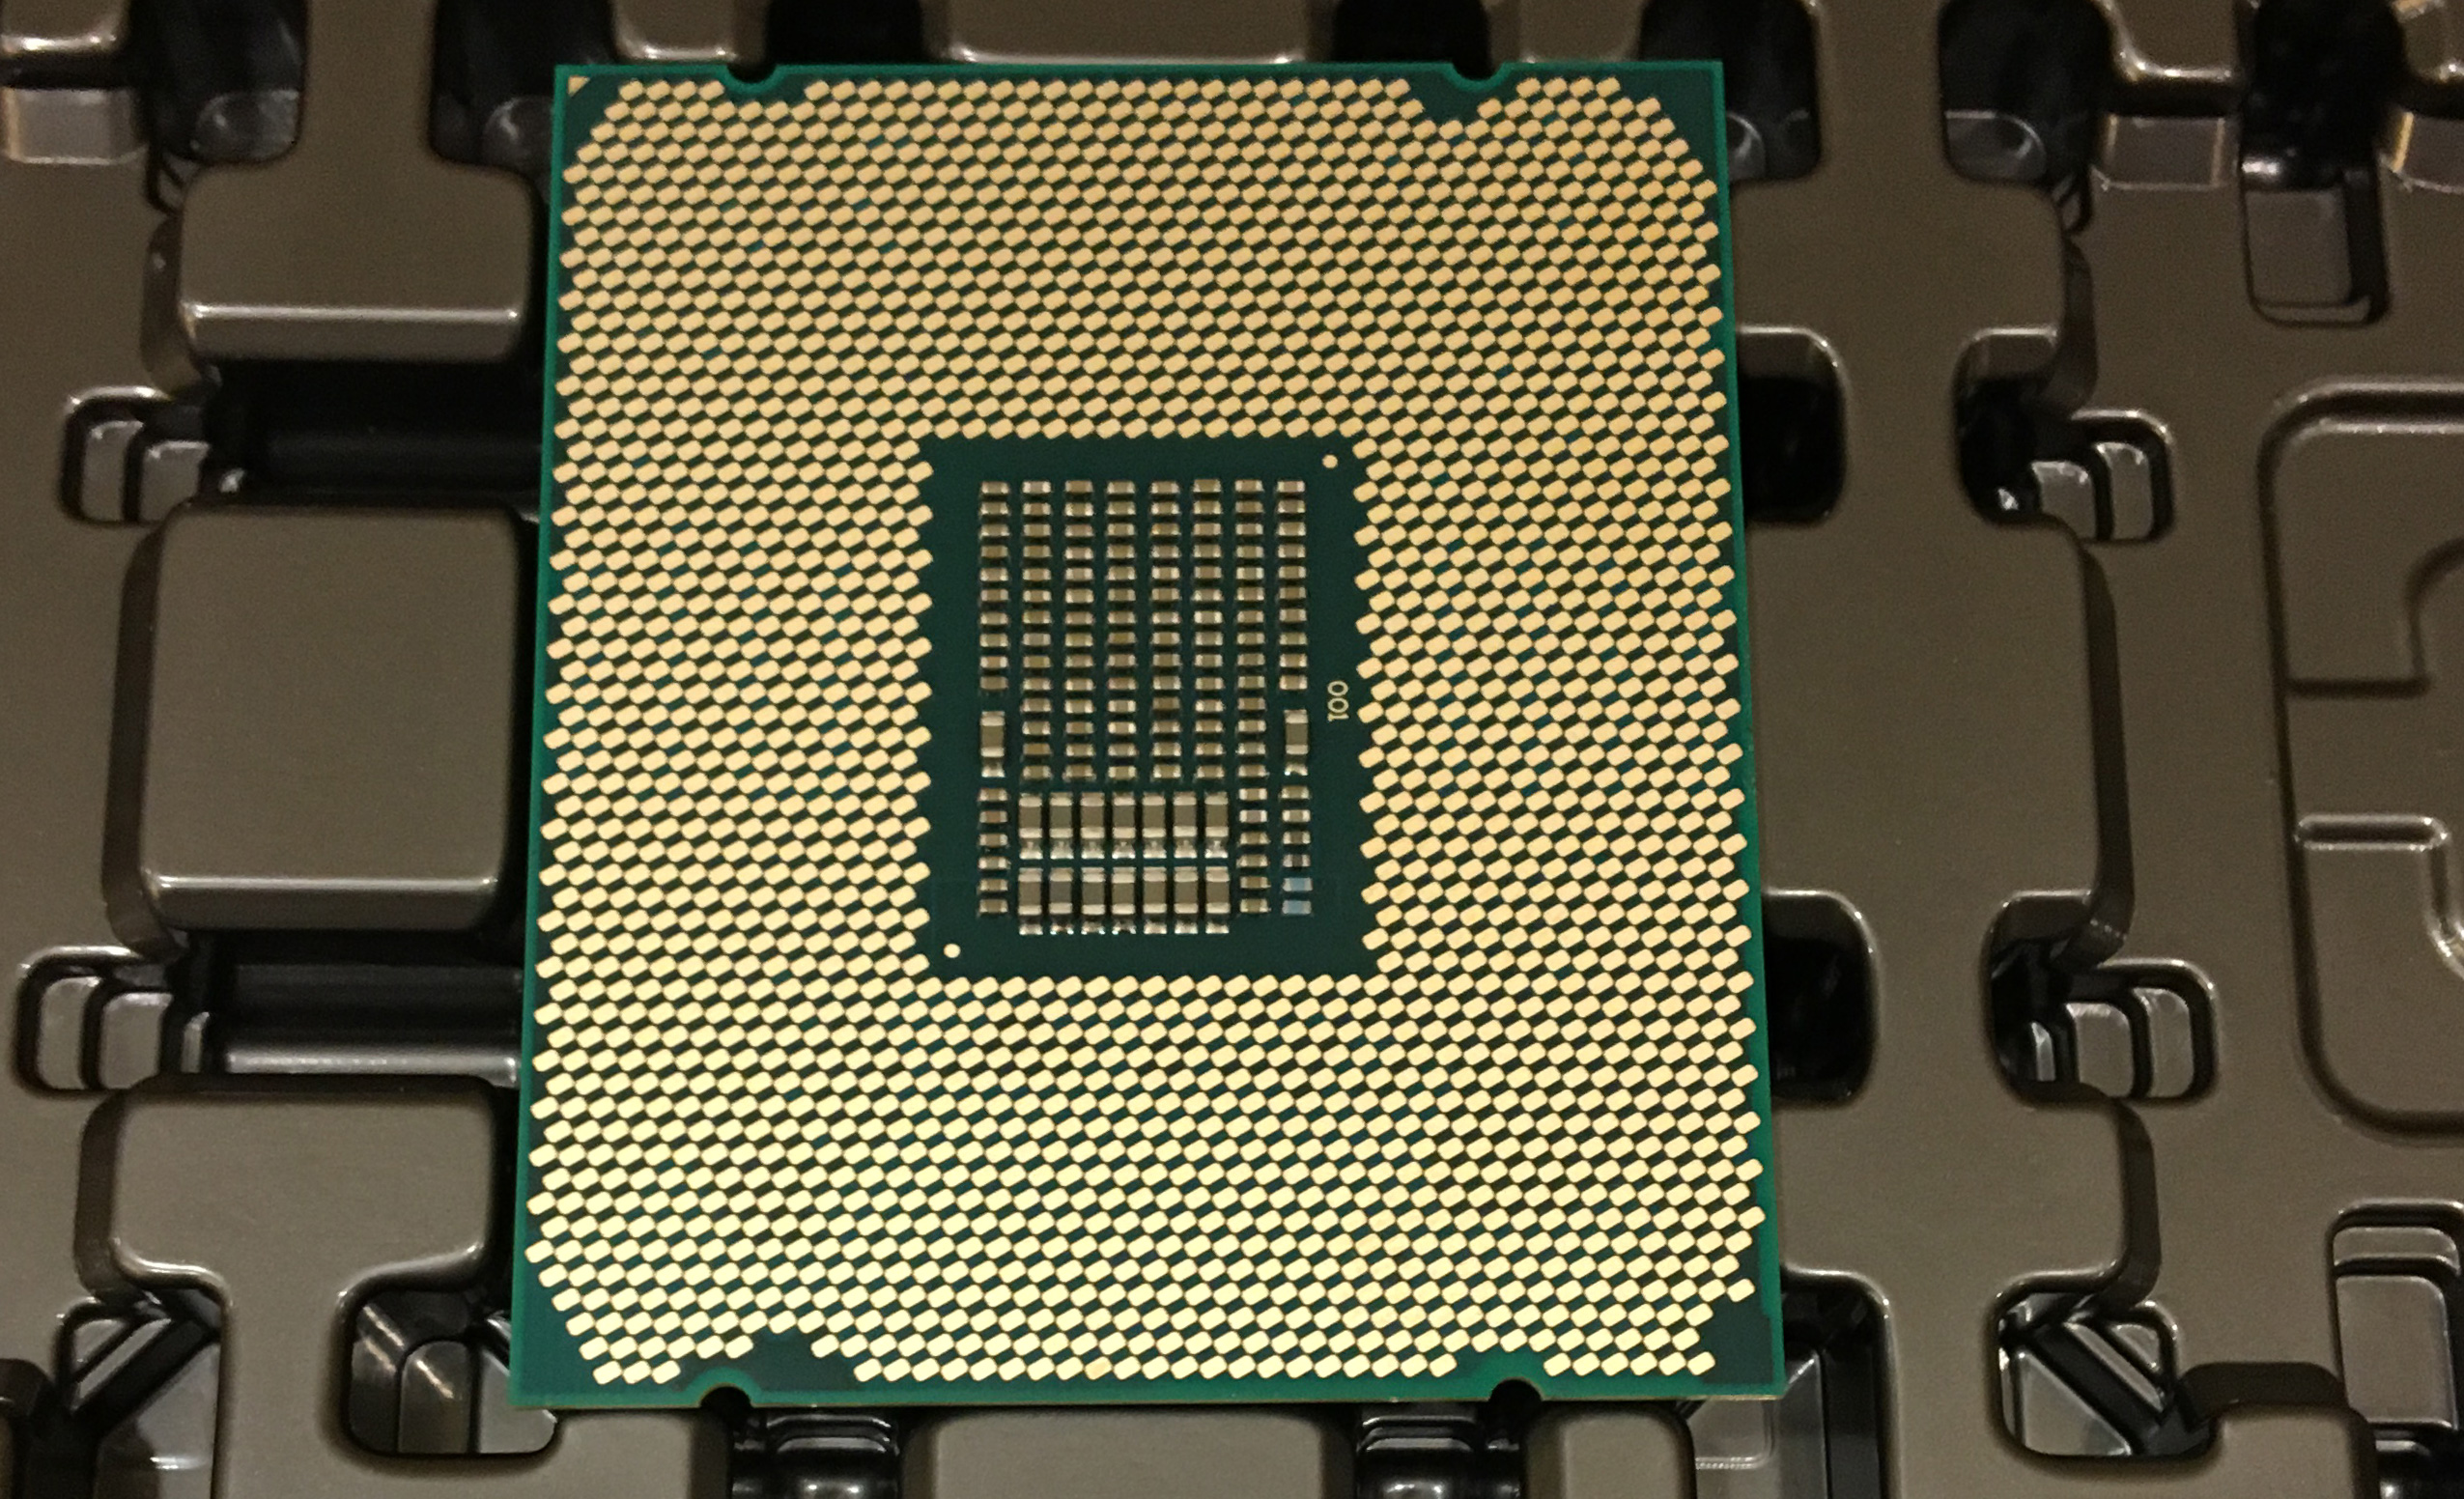 Intel Core i9-7980XE and Core i9-7960X Conclusion - The Intel Core i9